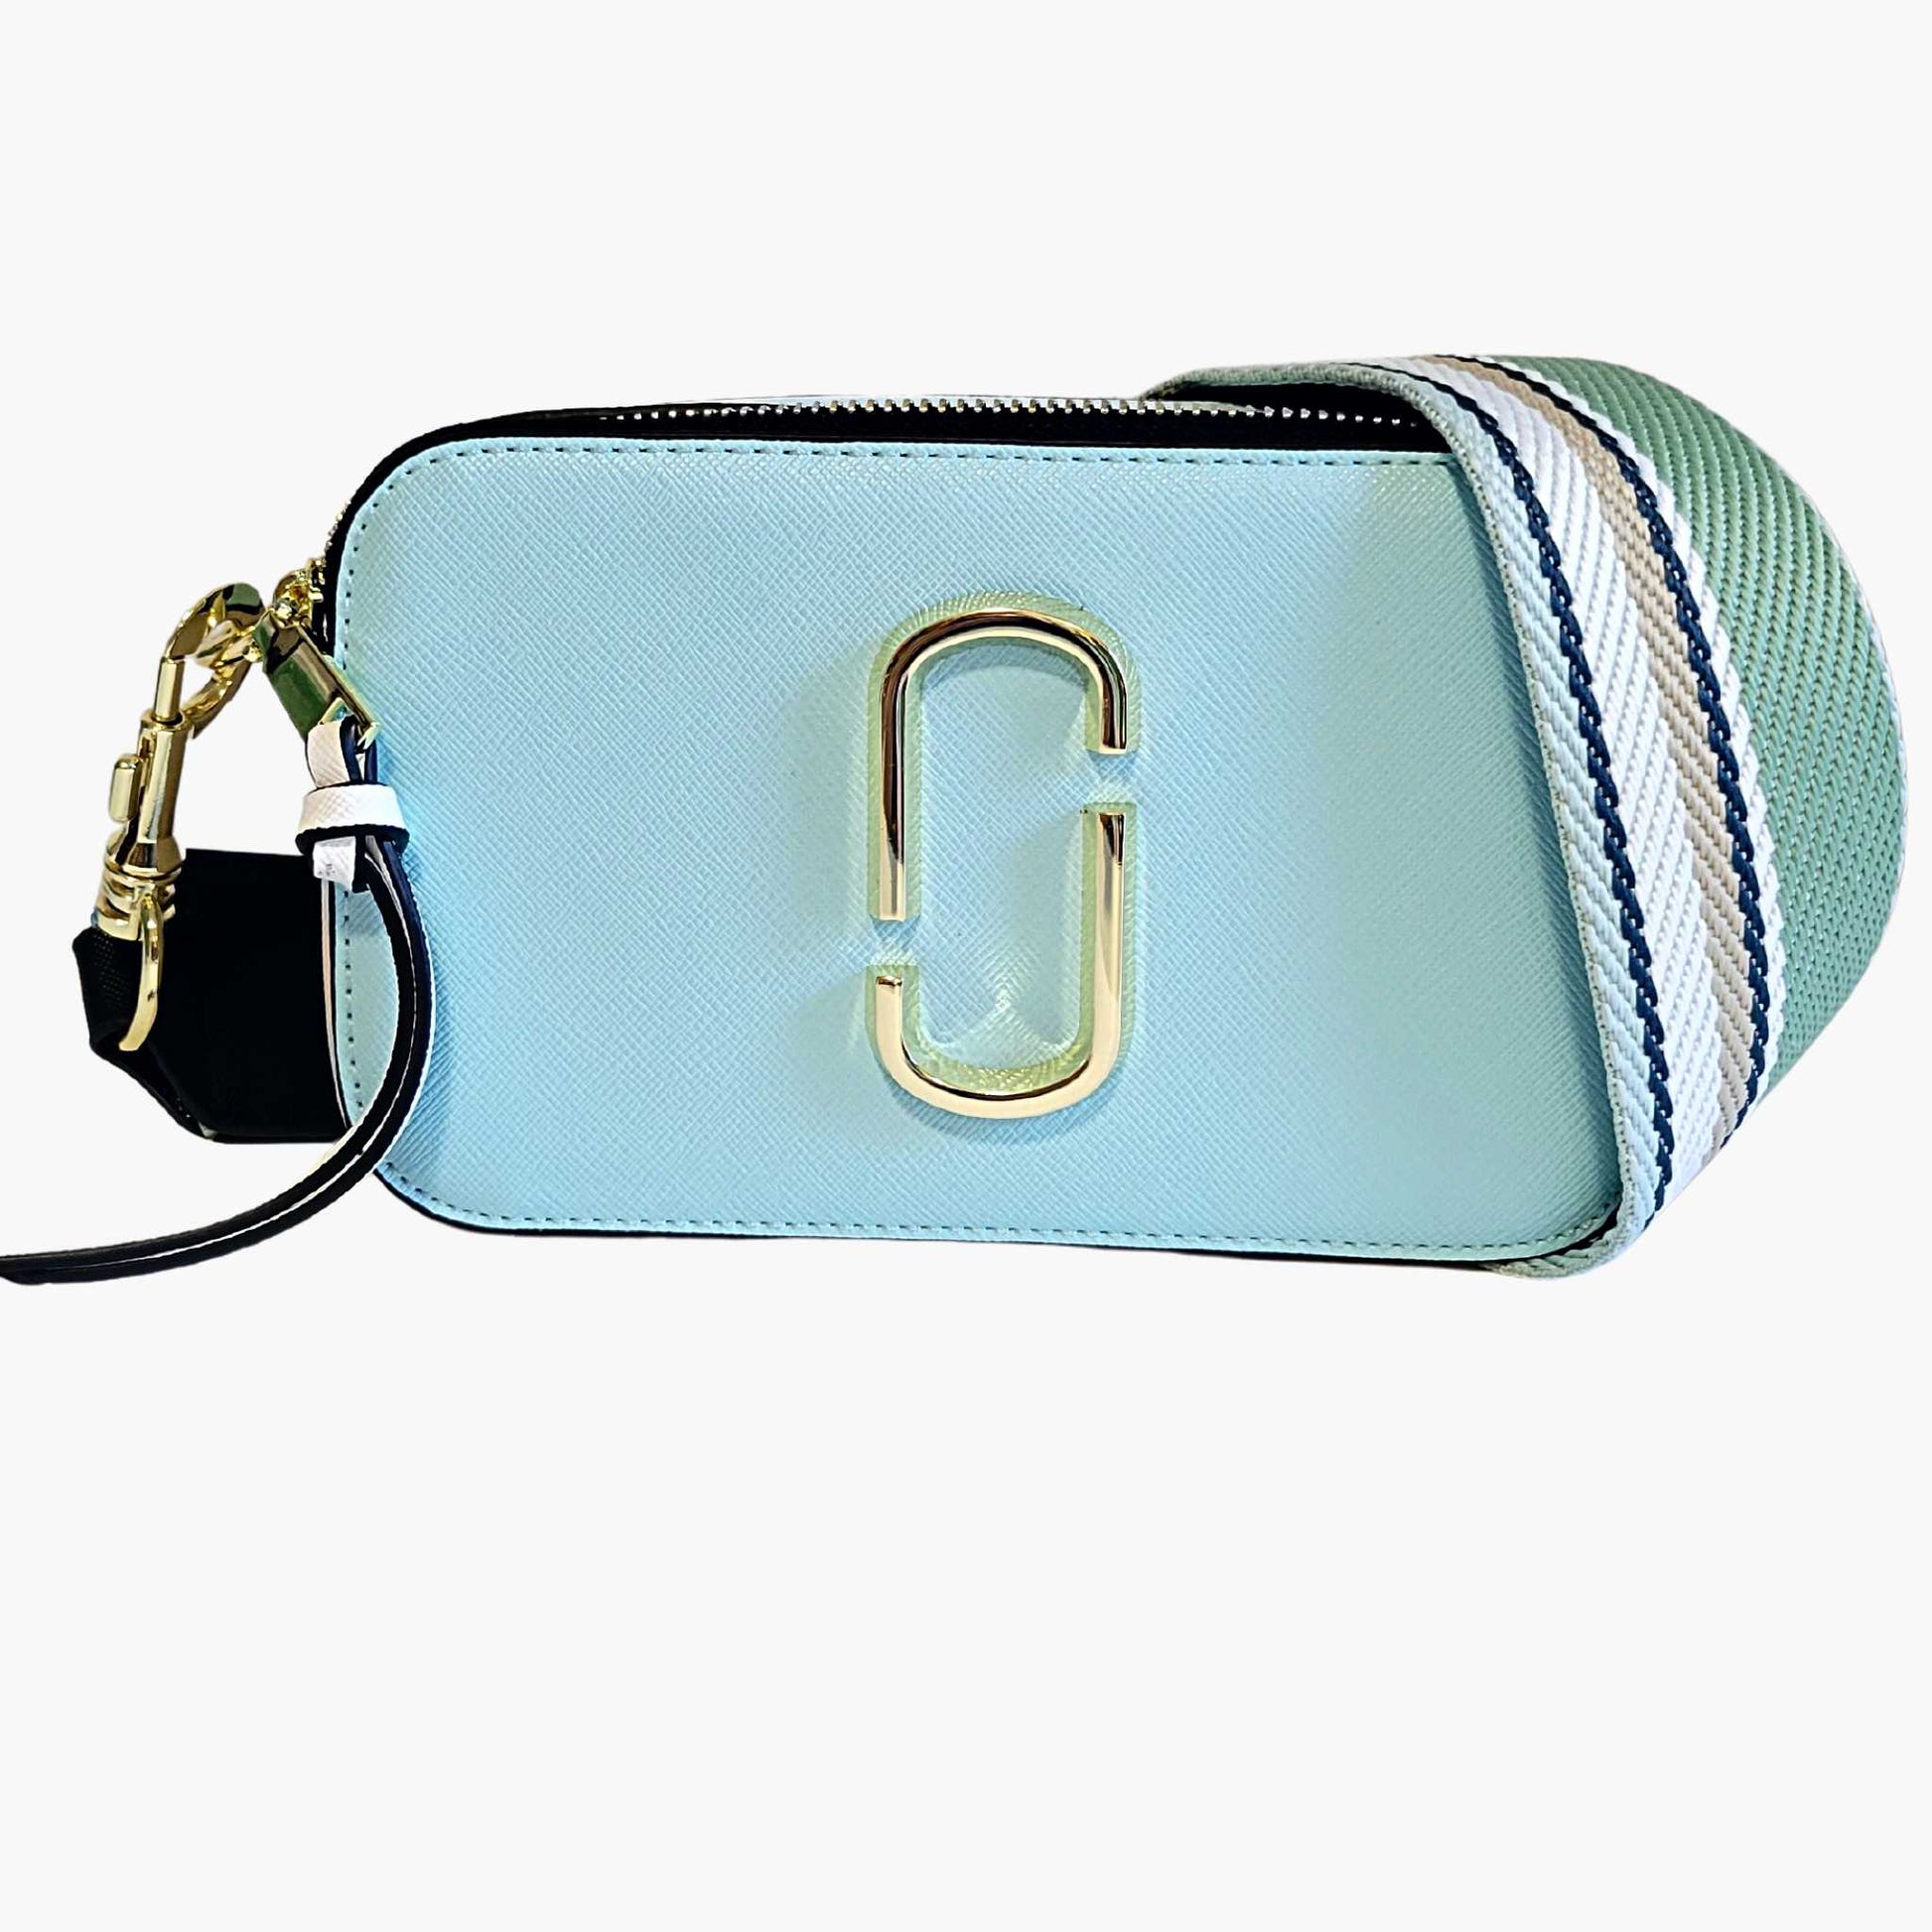 Purse Sky blue/sweet pink/white Handbag - Colorblock PU Leather Shoulder, Crossbody or Waist Bags - Camera Bag Style